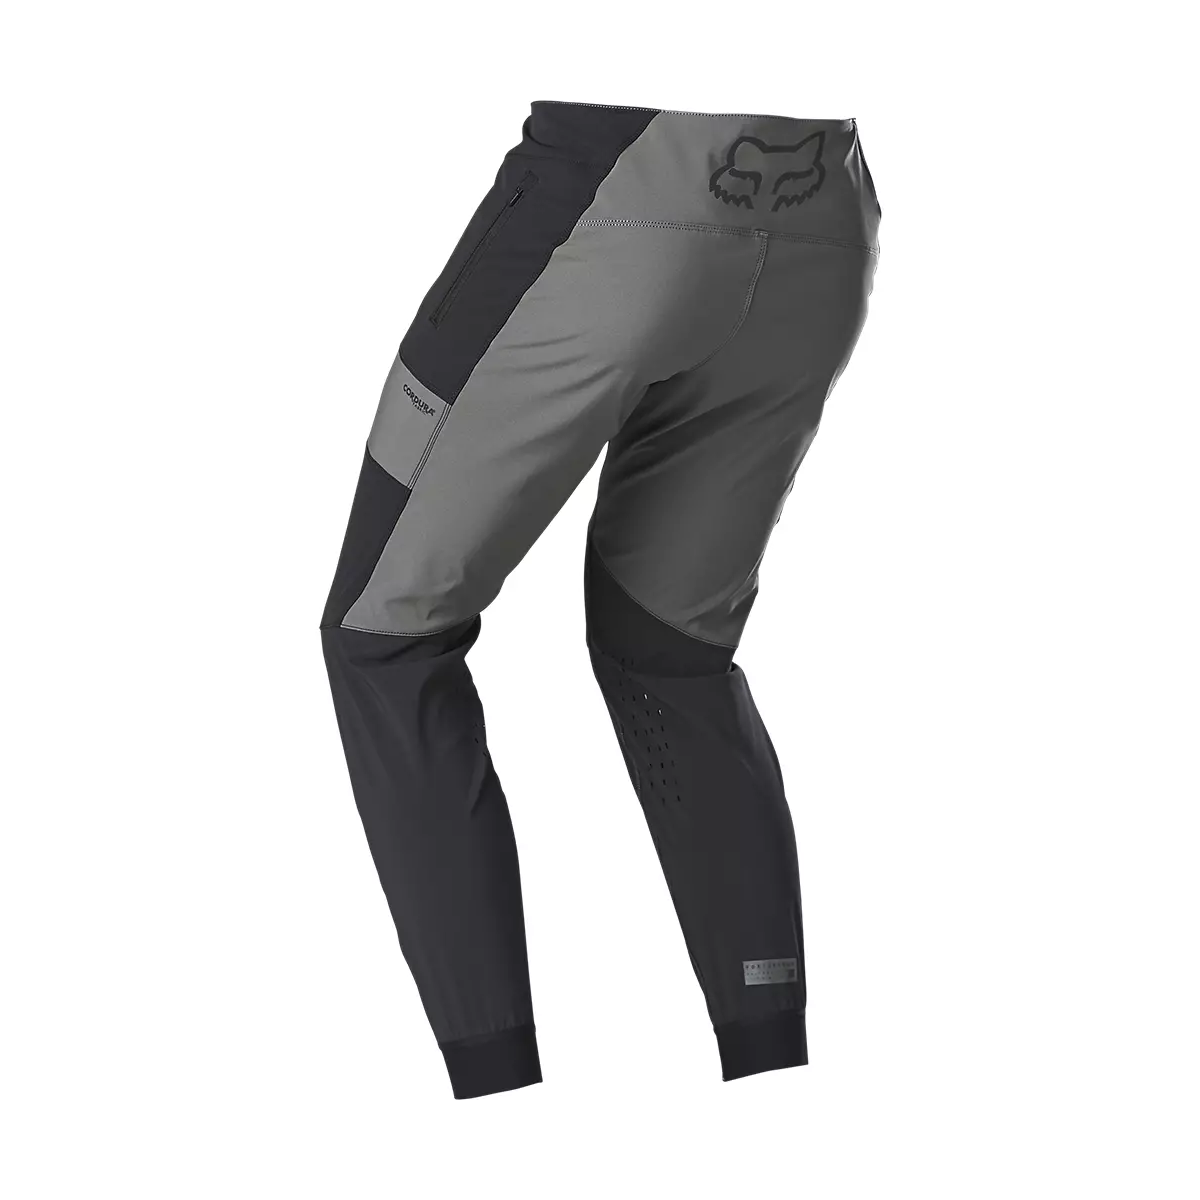 Pantalón largo Enduro/DH Fox Defend Pro negro gris